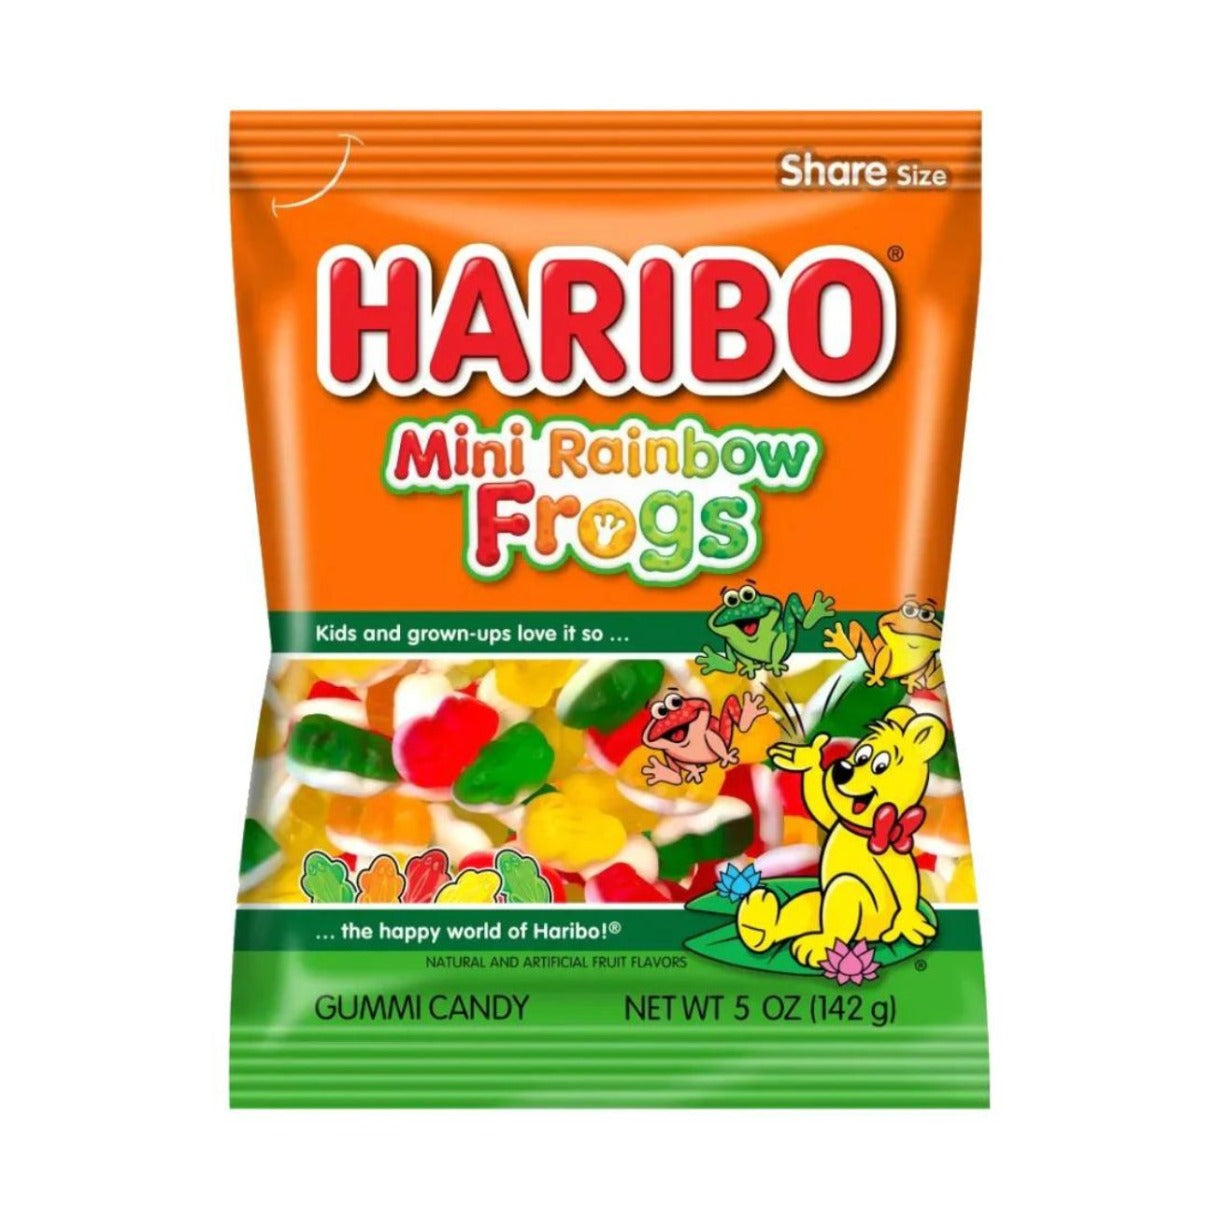 Haribo Mini Rainbow Frogs Gummi Candy 5oz - 12ct